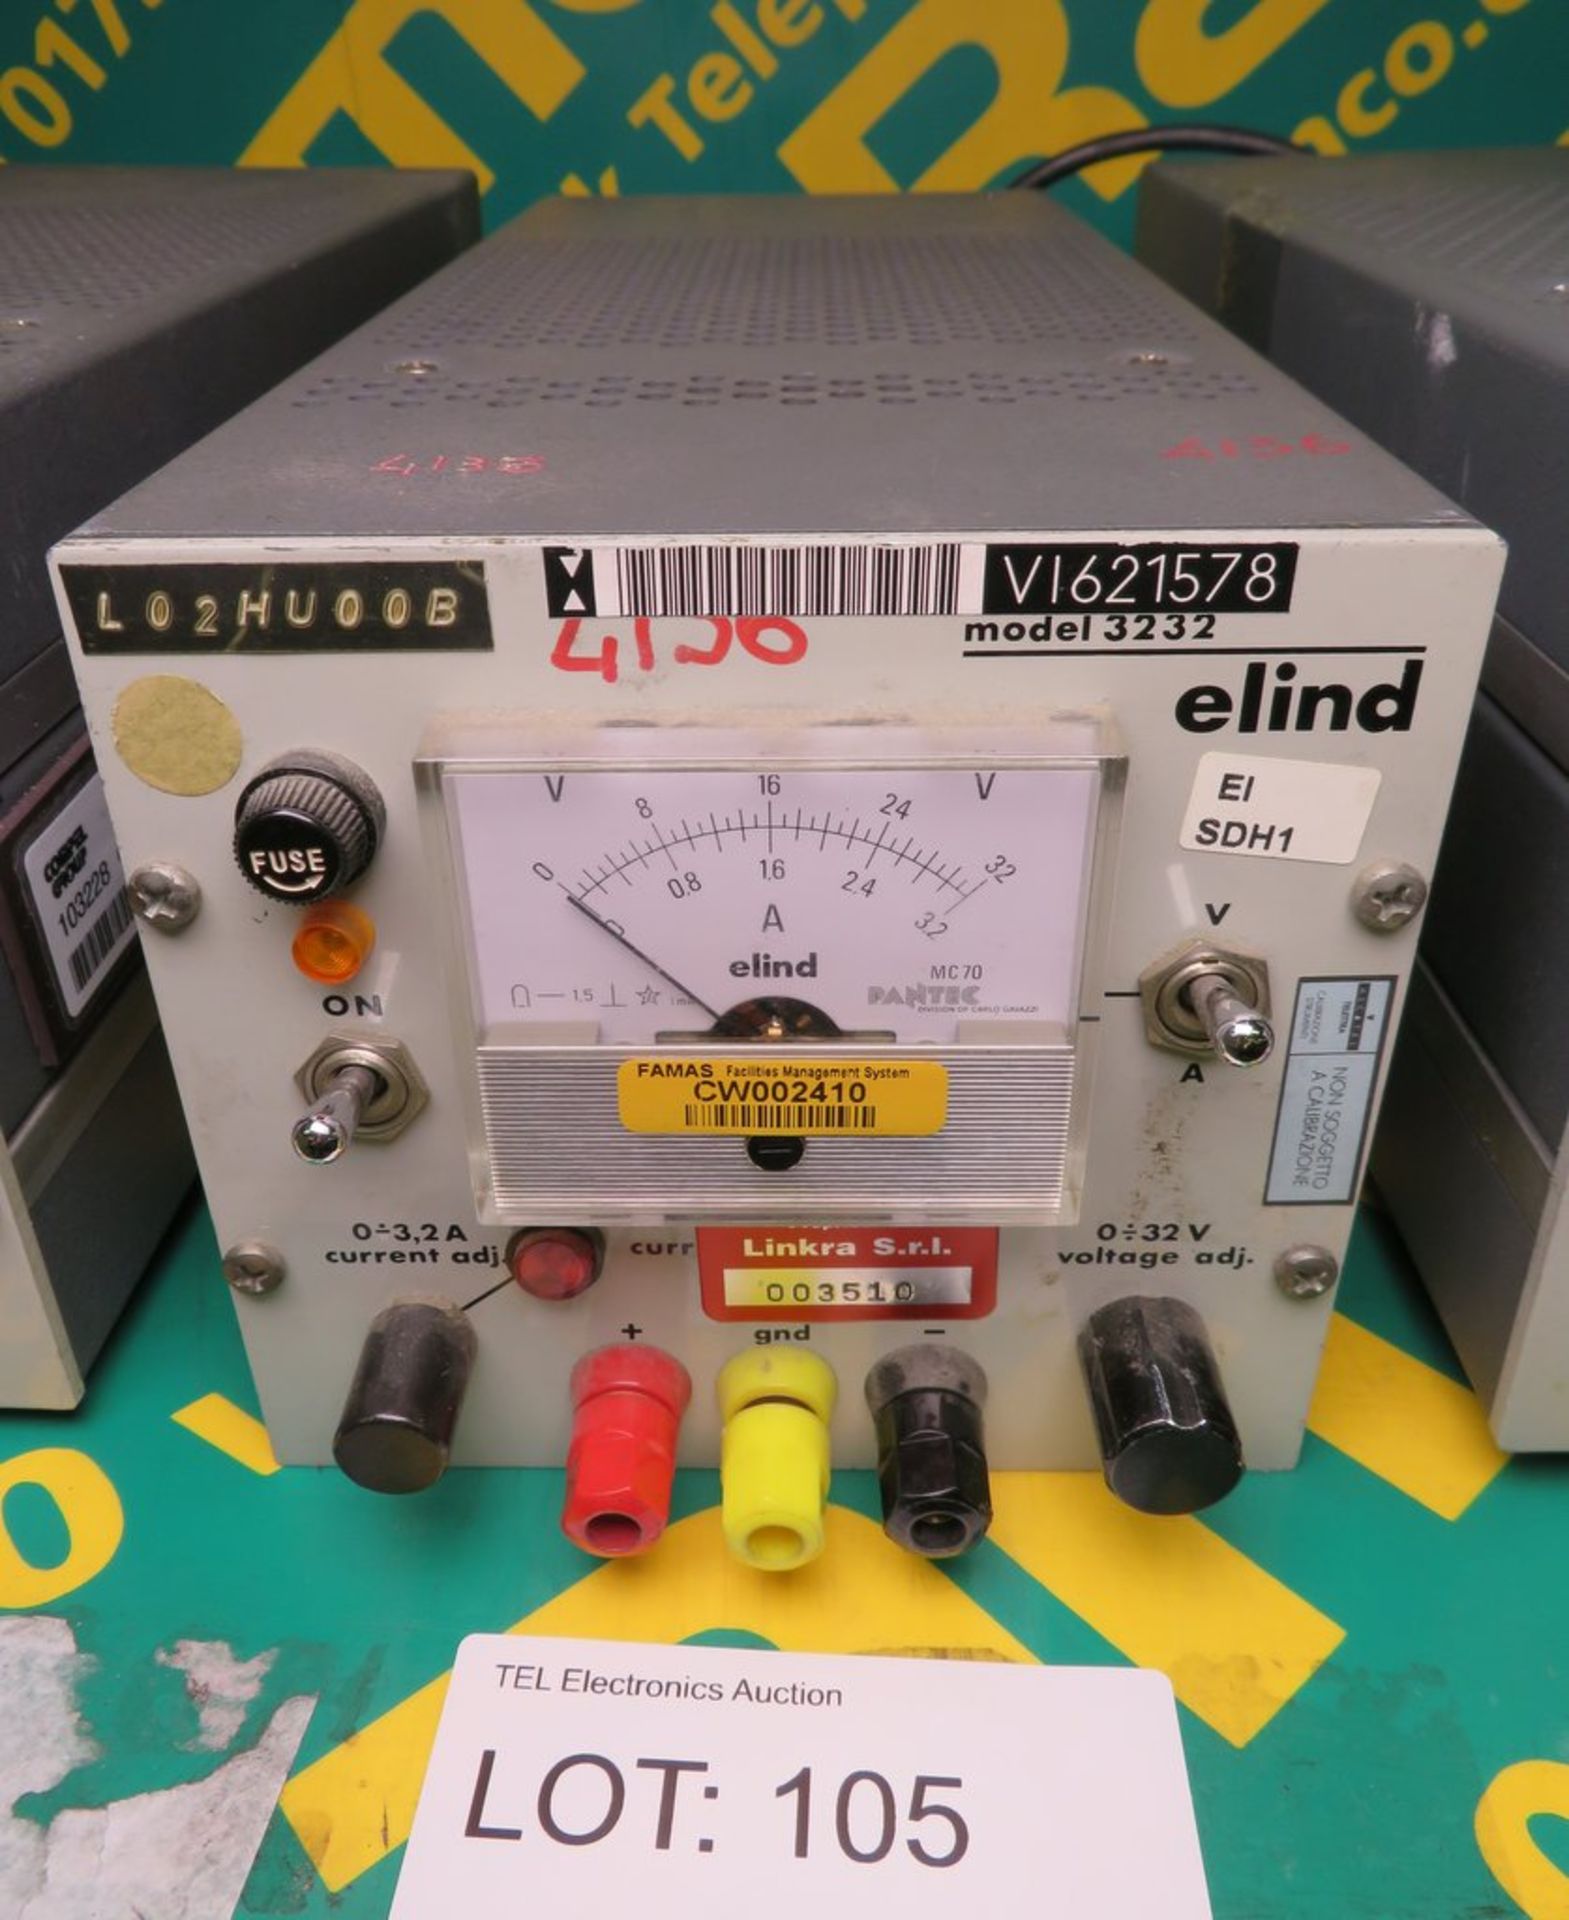 Elind 3232 Power Supply